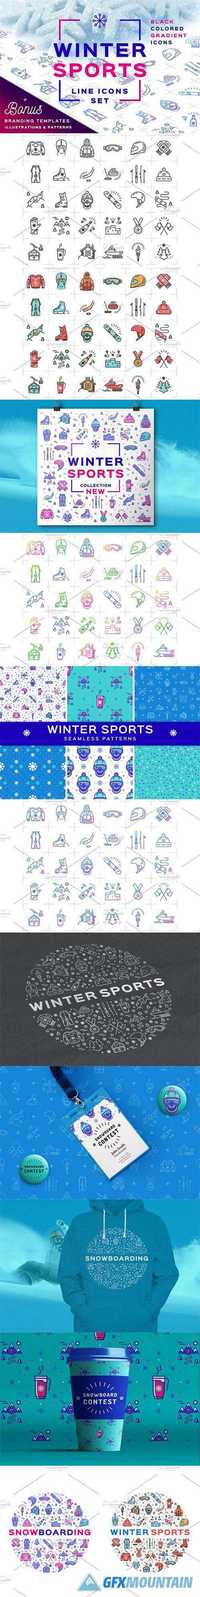  Winter Sport Icons Branding Graphics  1052853 